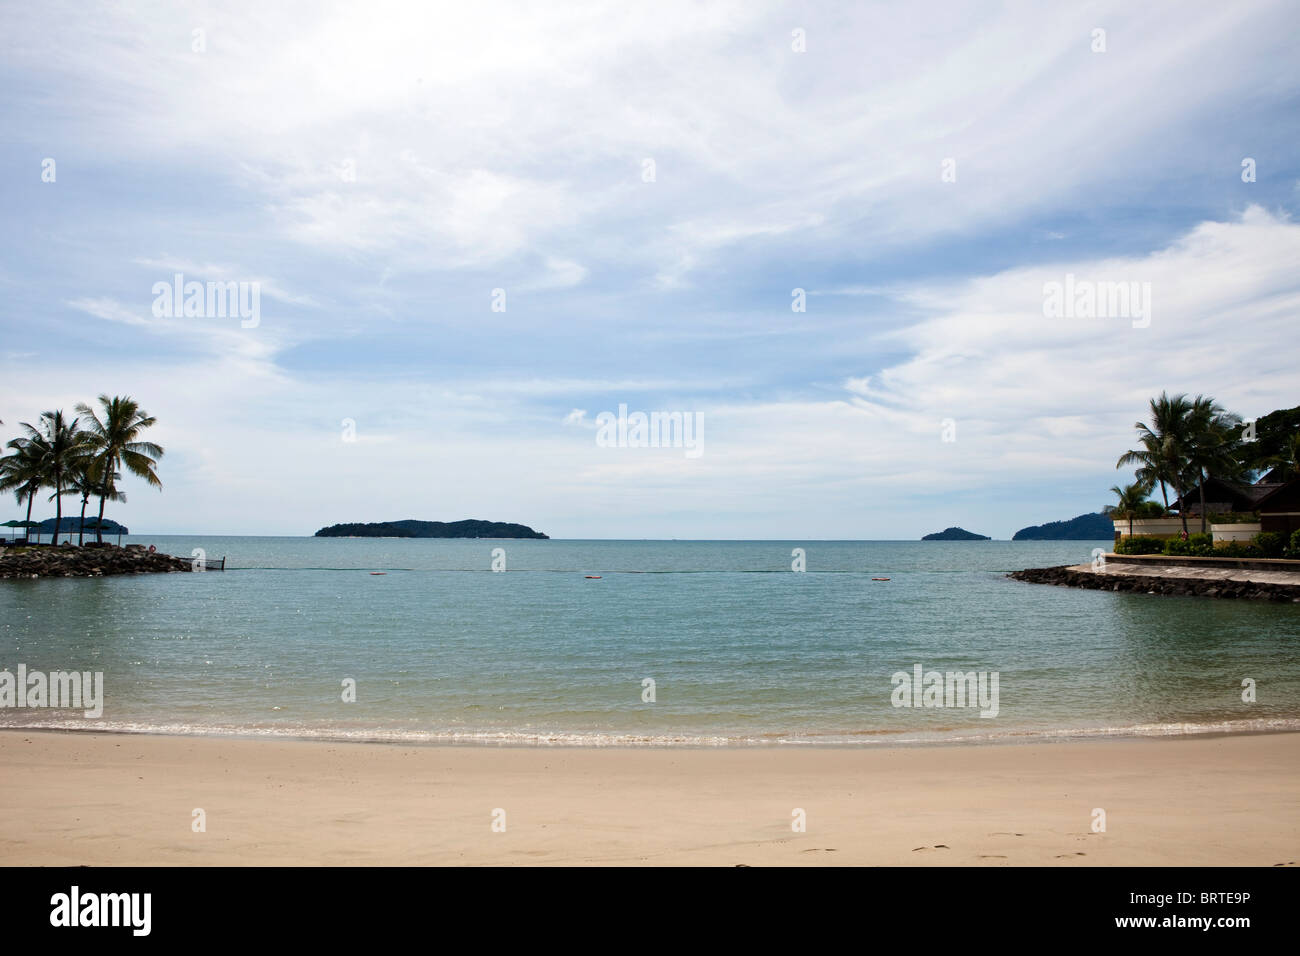 A view of the beach at the Tanjung Aru Resort in Kota Kinabalu in Sabah, Malaysian Borneo Stock Photo